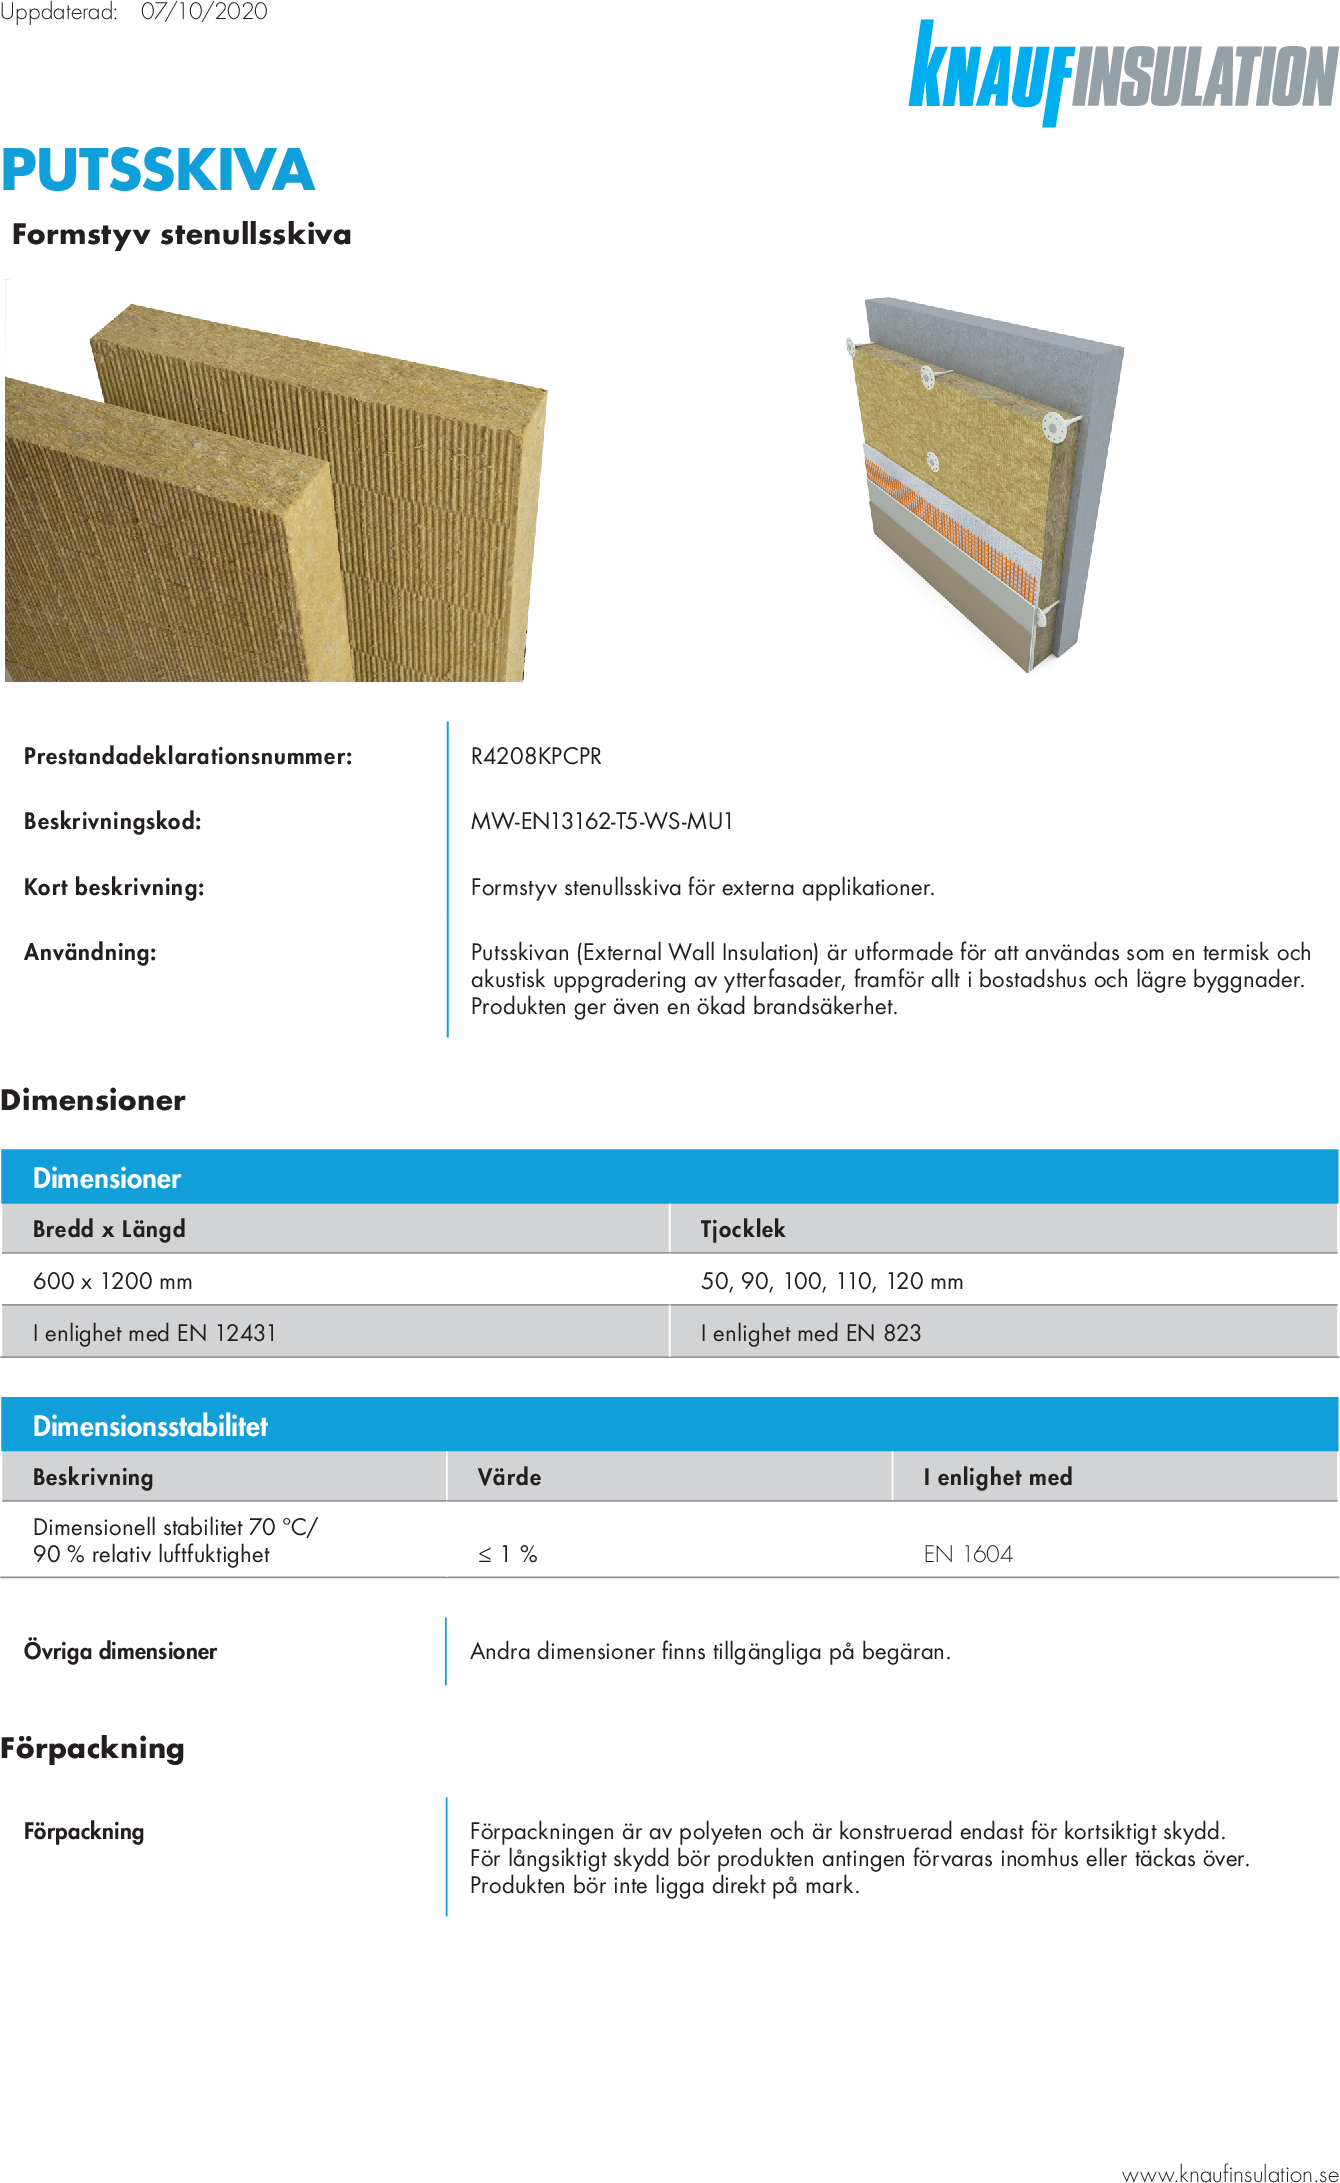 Produktdatablad Putsskiva 36 (External Wall Insulation Slabs)